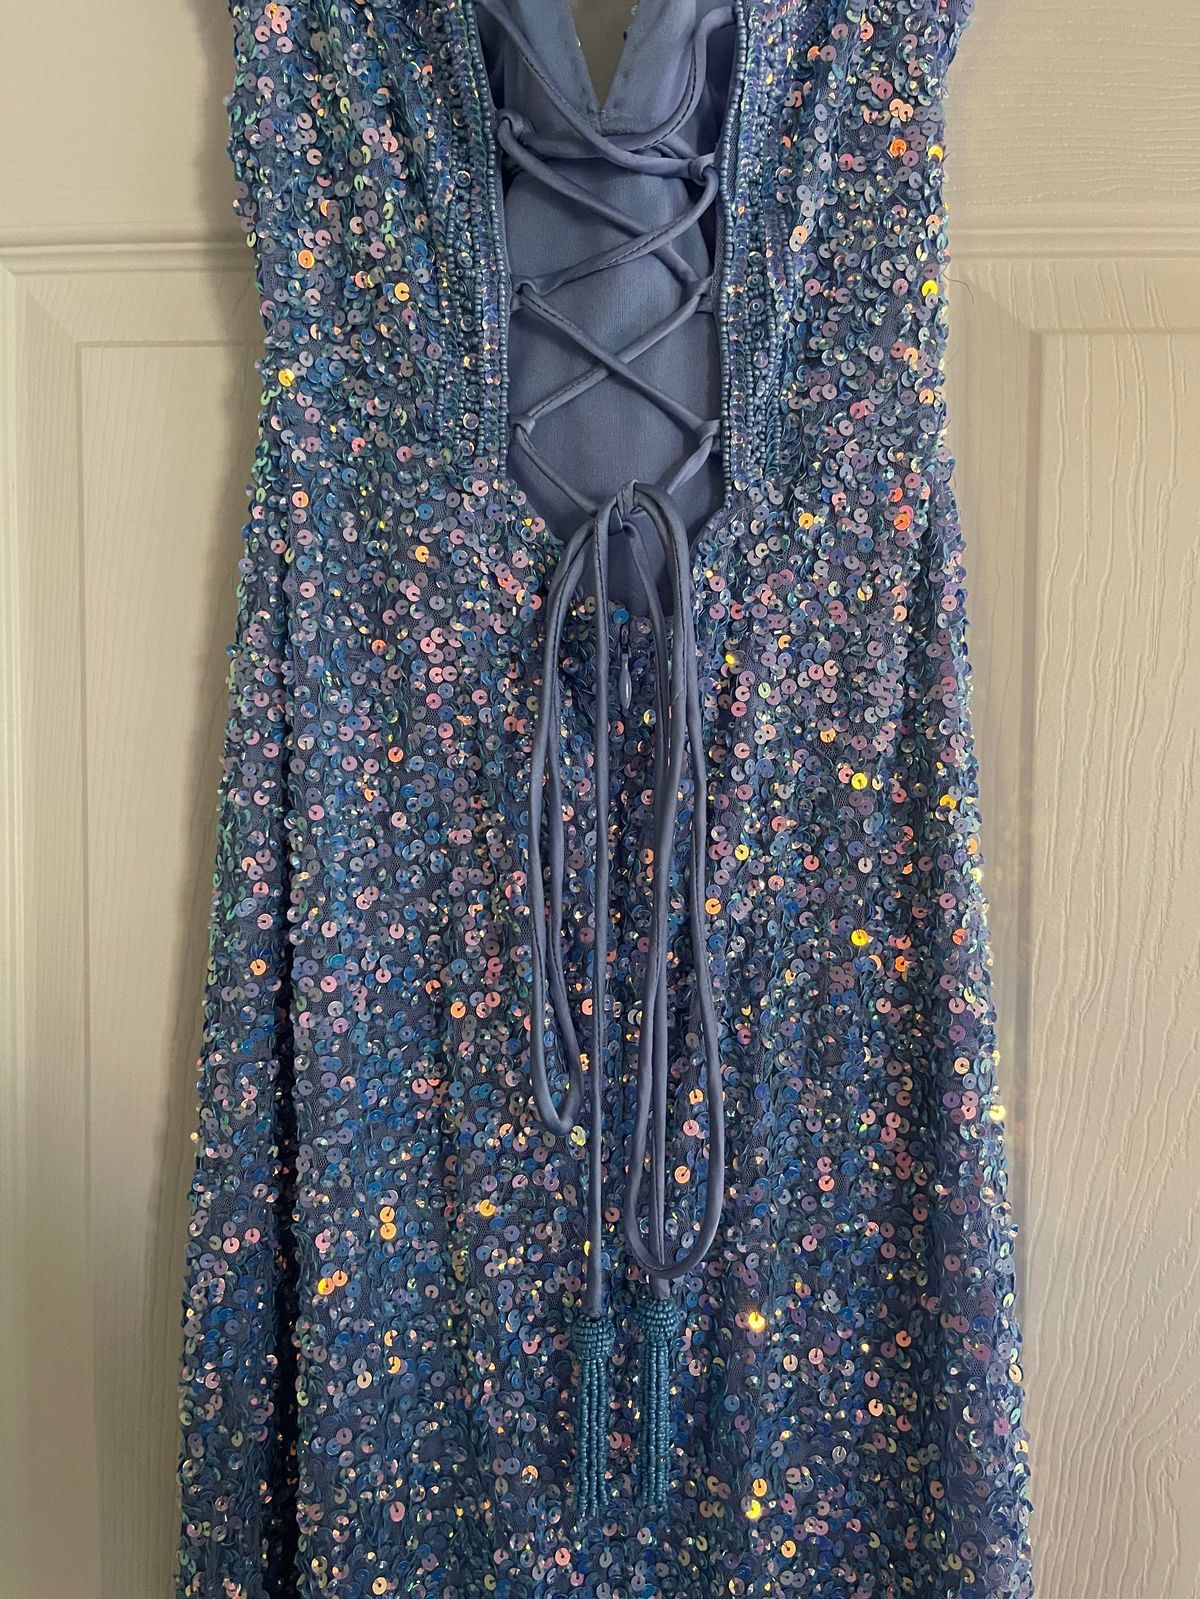 Style 70195 Rachel Allan Size 6 Prom Halter Blue Side Slit Dress on Queenly